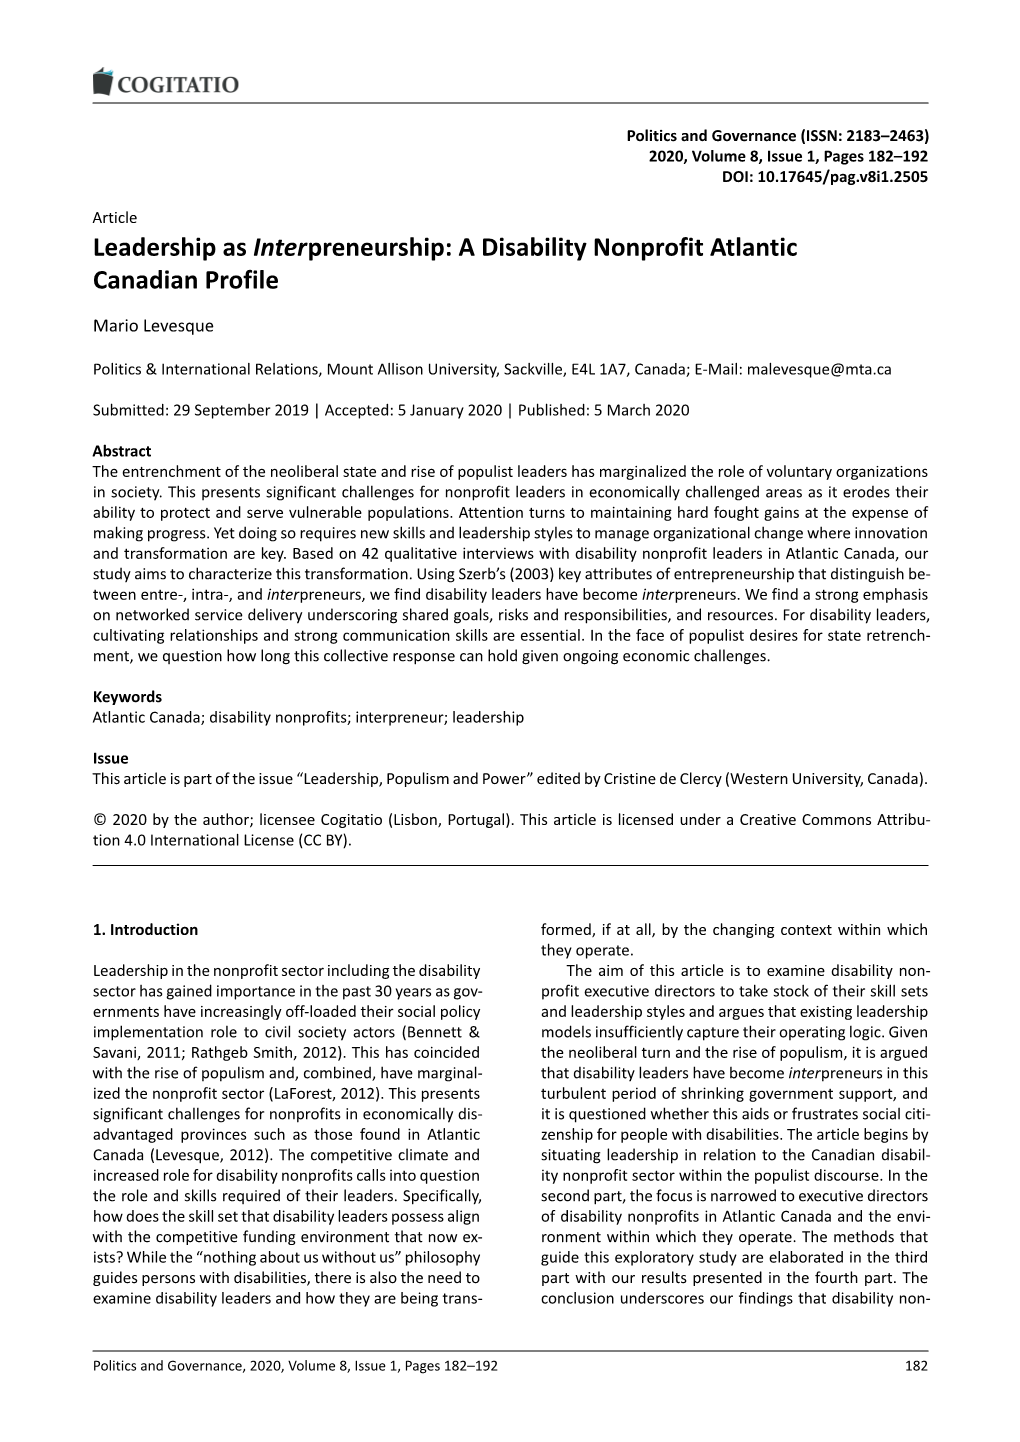 Leadership As Interpreneurship: a Disability Nonprofit Atlantic Canadian Profile